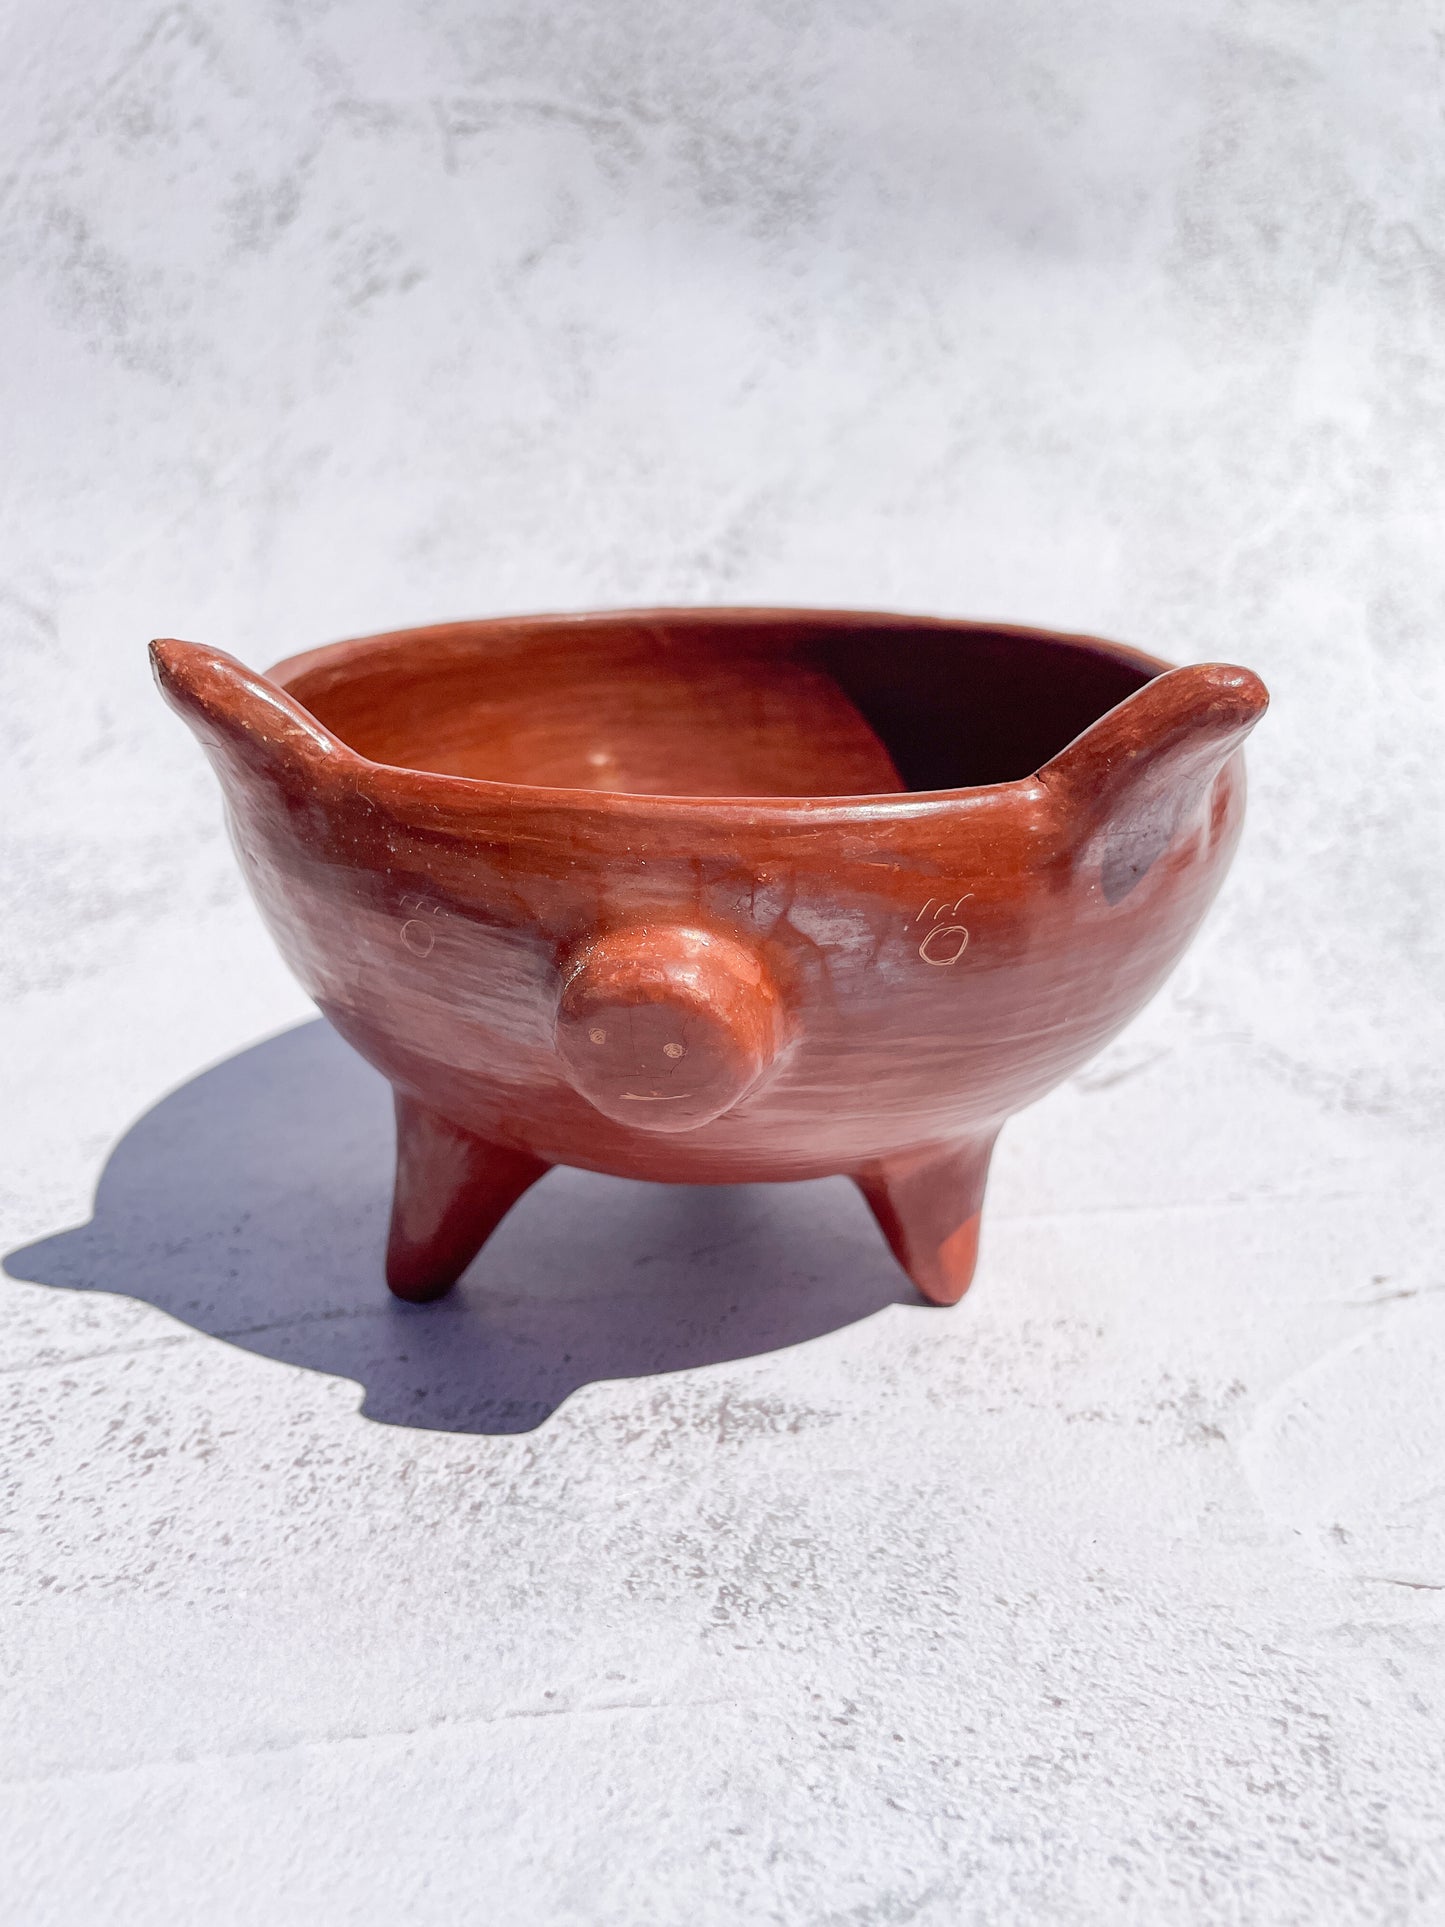 Oaxaca Red Clay Piggy Bowl Salsero Marranito Barro Rojo Marranito Bowl Chochinito Bowl